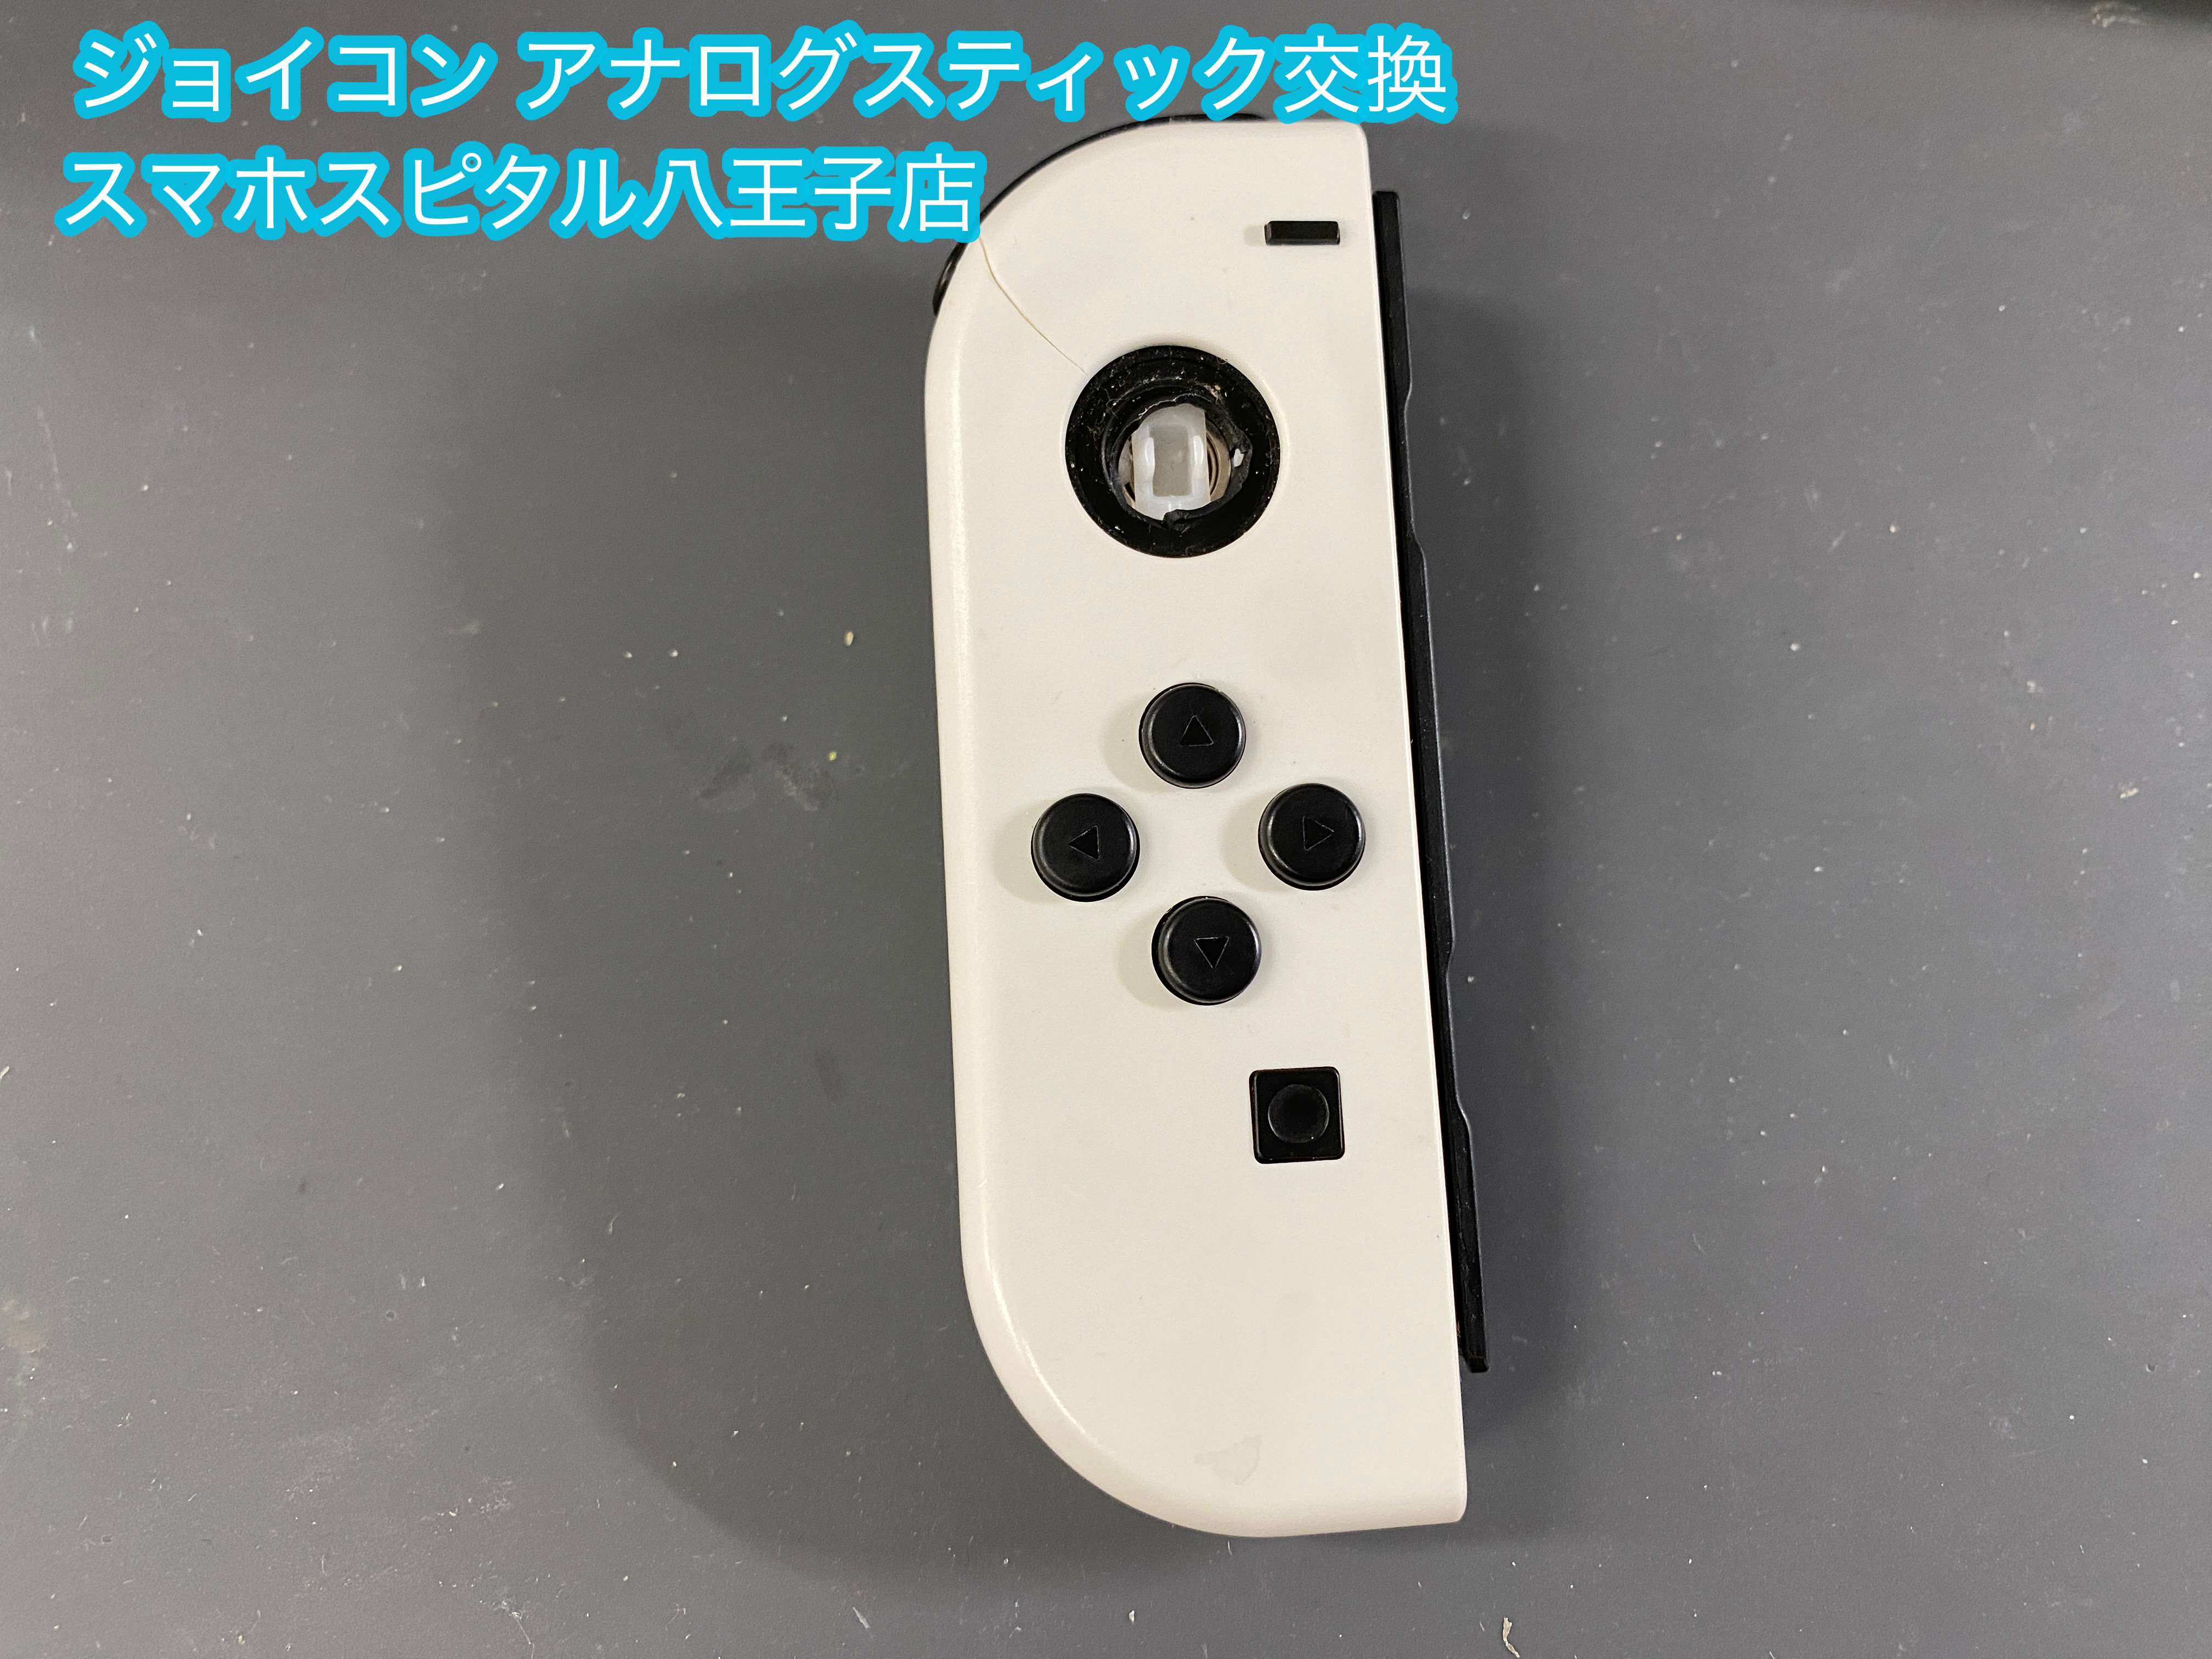 Nintendo Switch(有機ELモデル)Joy-Con ホワイト 任天堂ゲームソフト/ゲーム機本体